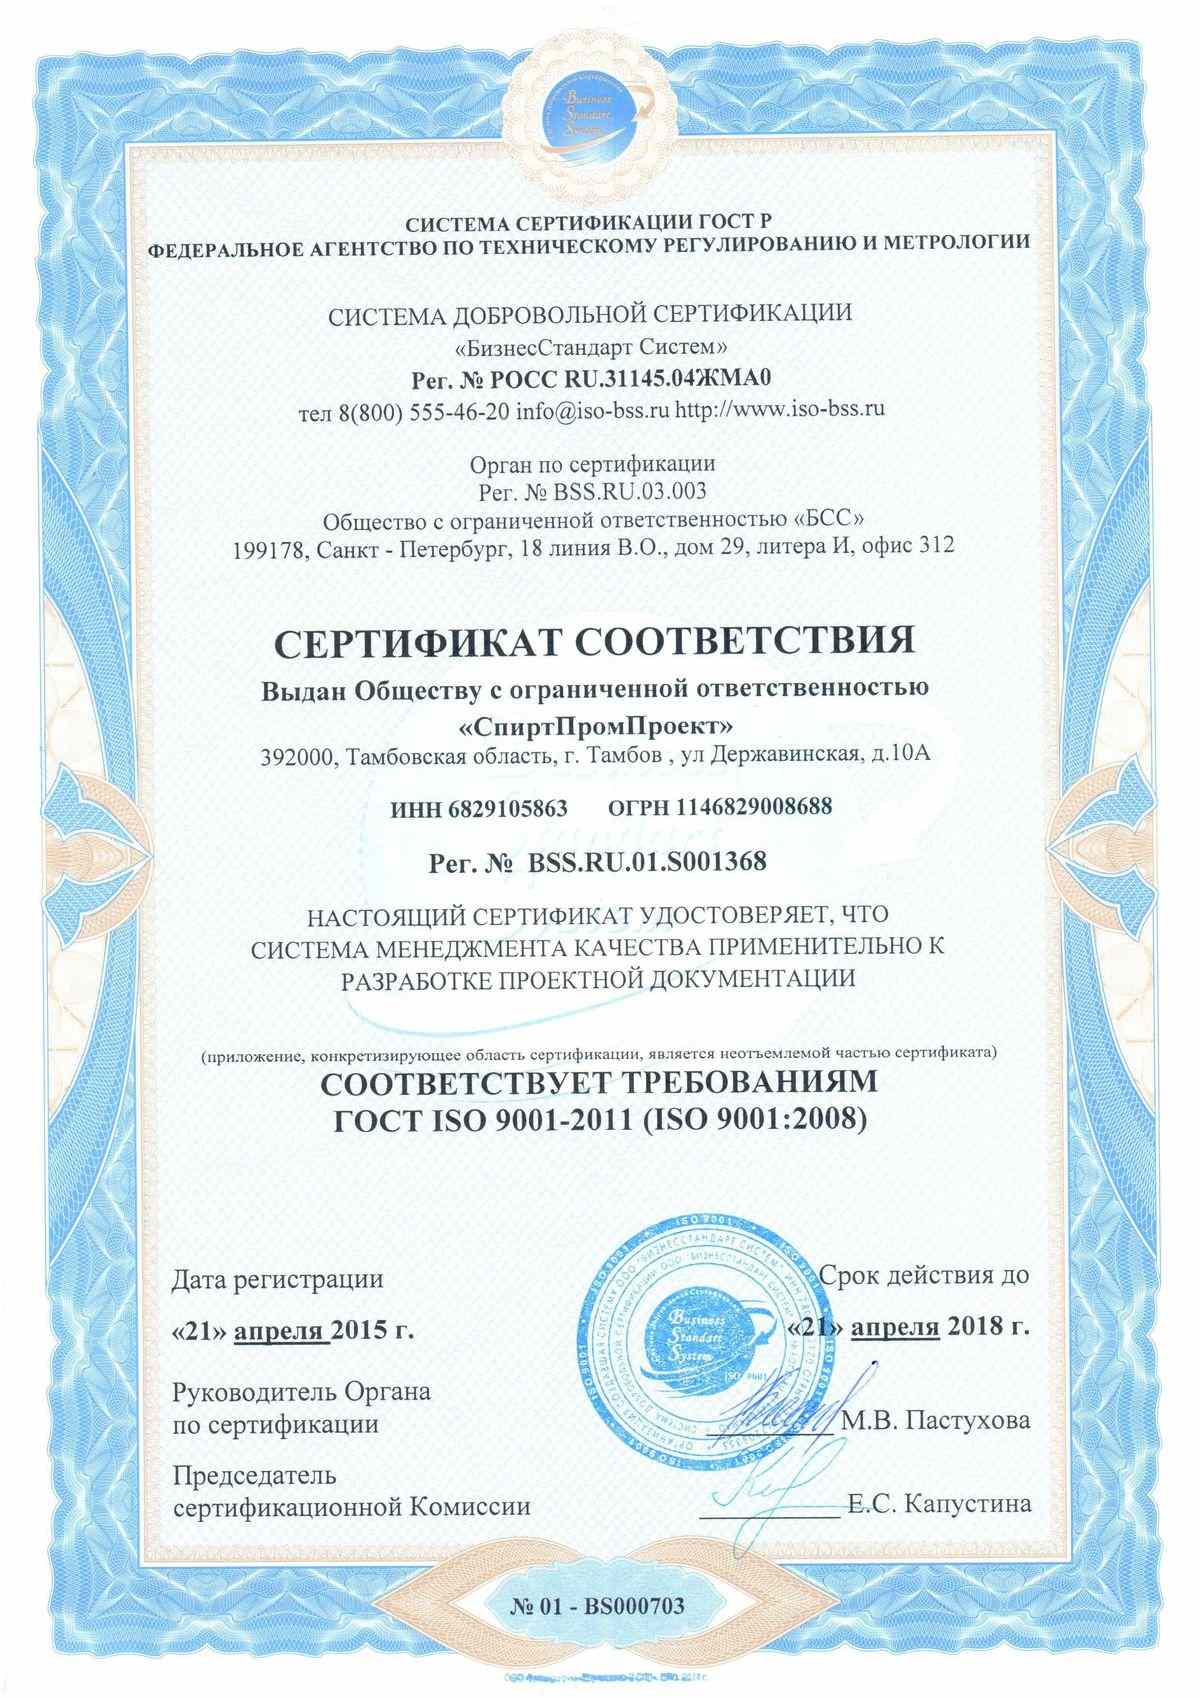 Сертификат соответствия ISO 9001 СпиртПромПроект